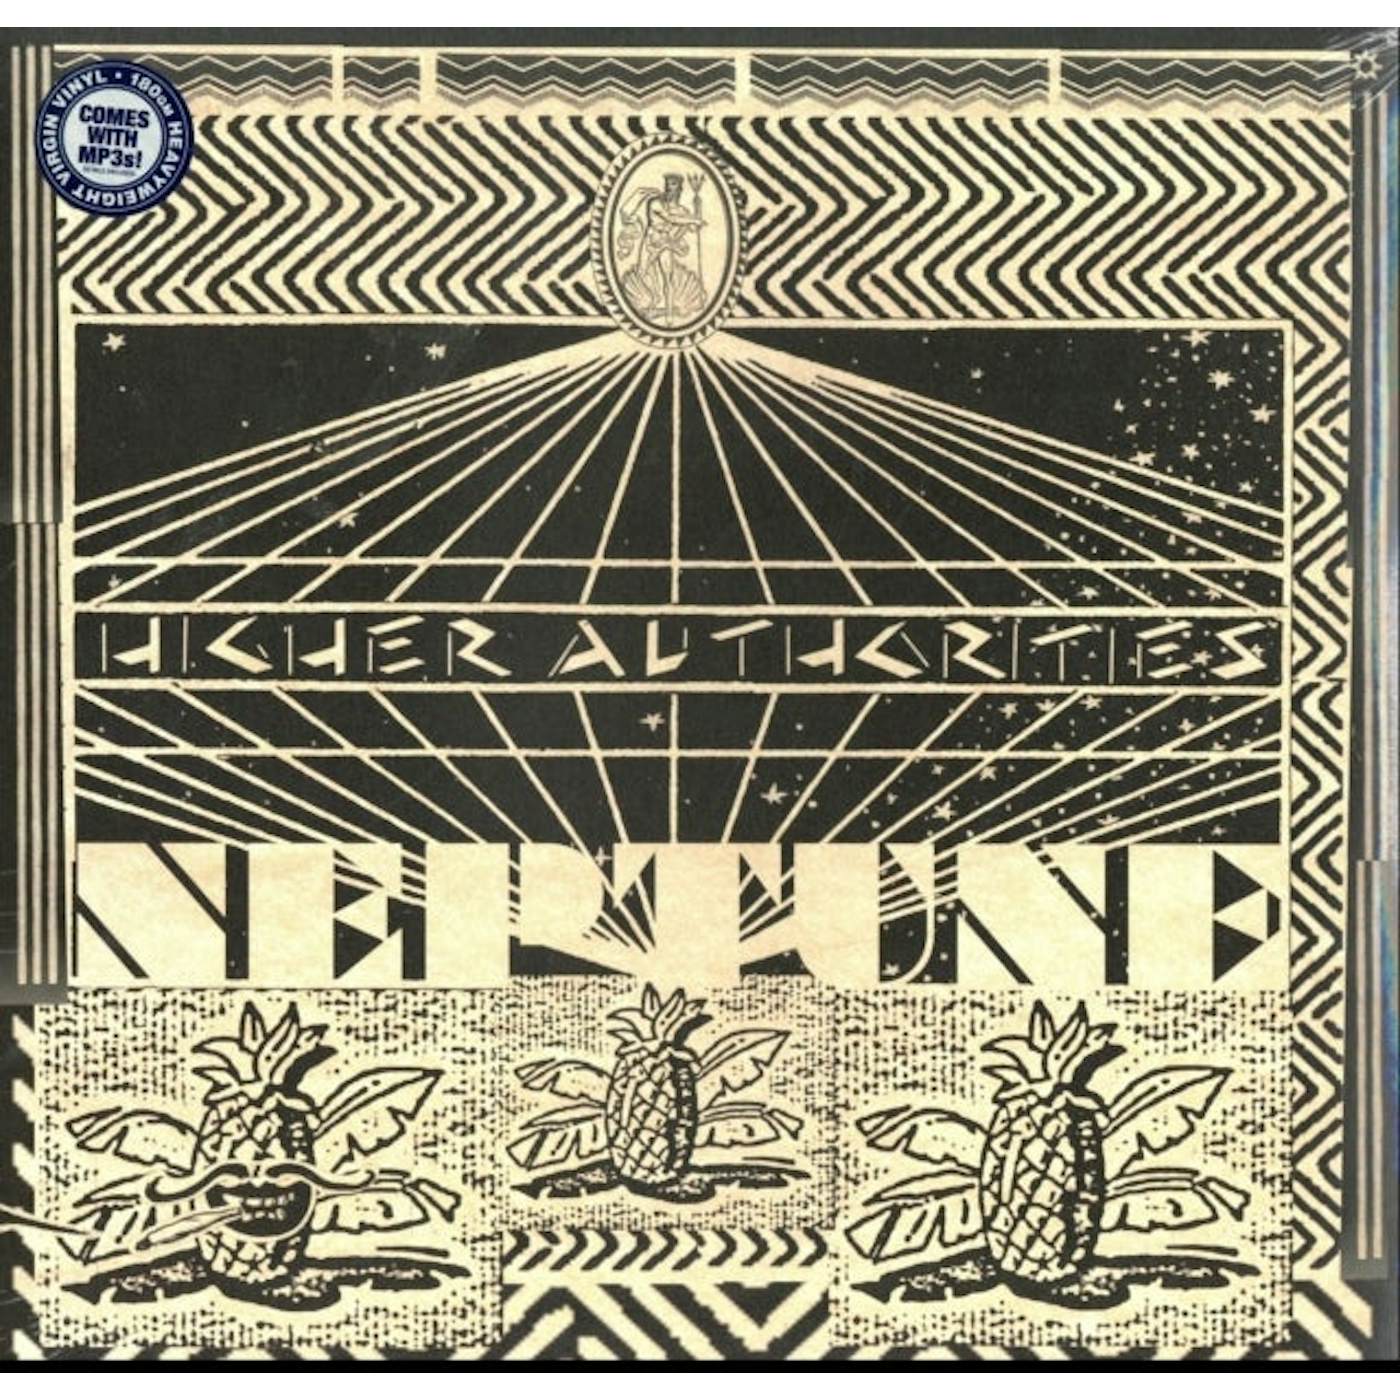 Higher Authorities LP Vinyl Record - Neptune